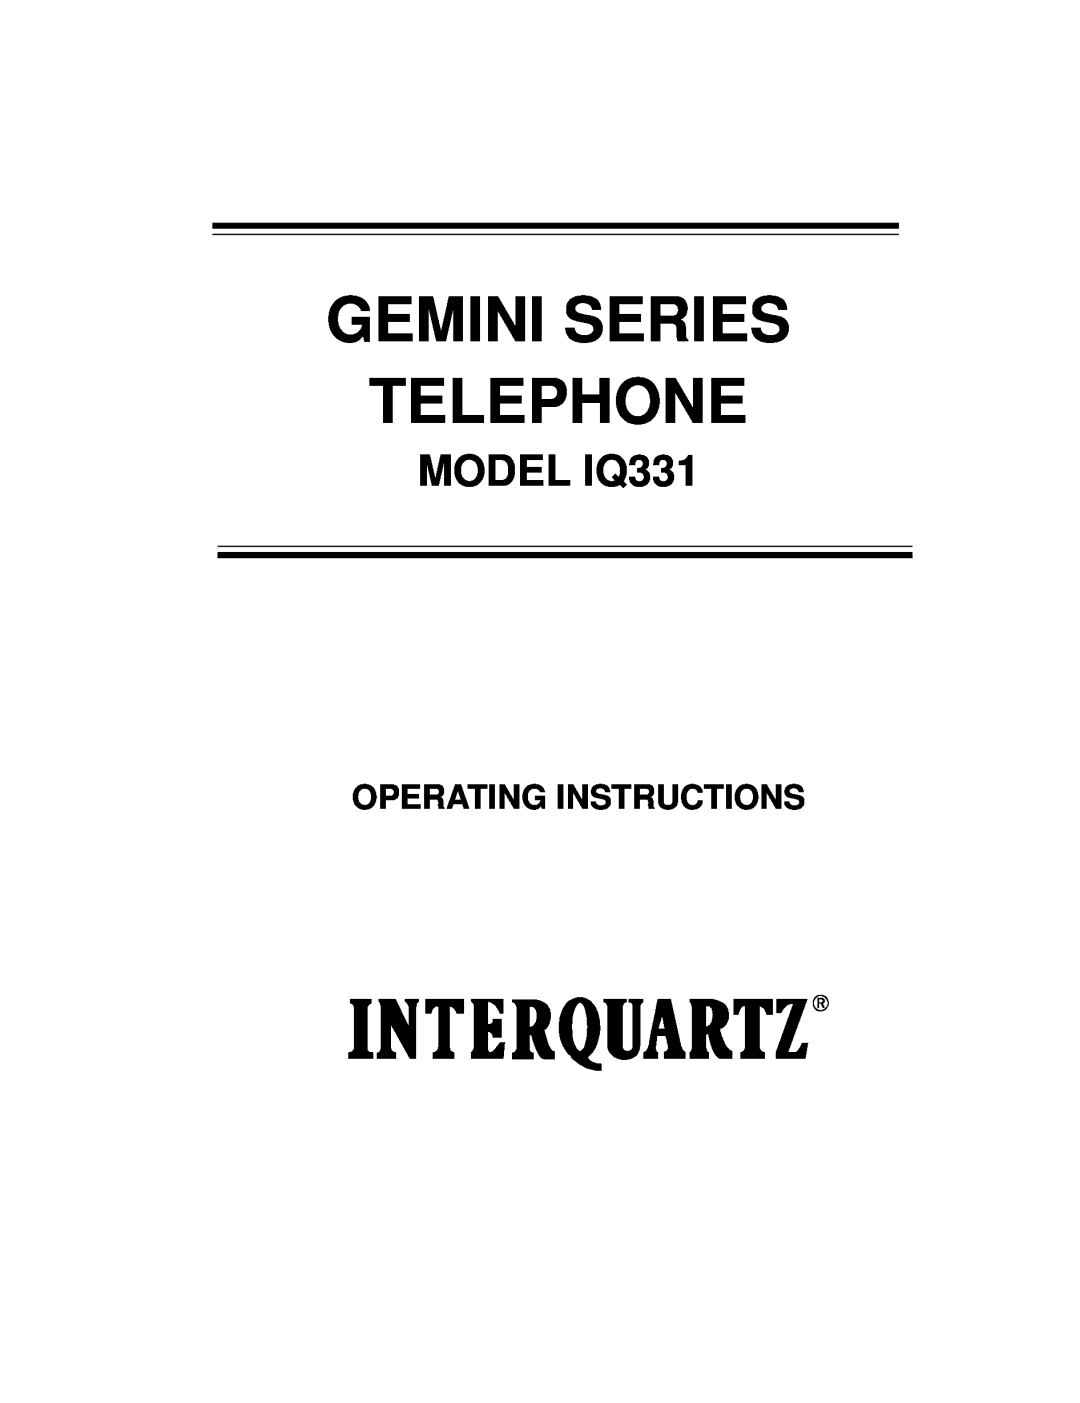 Interquartz manual MODEL IQ331, Operating Instructions, Gemini Series Telephone 